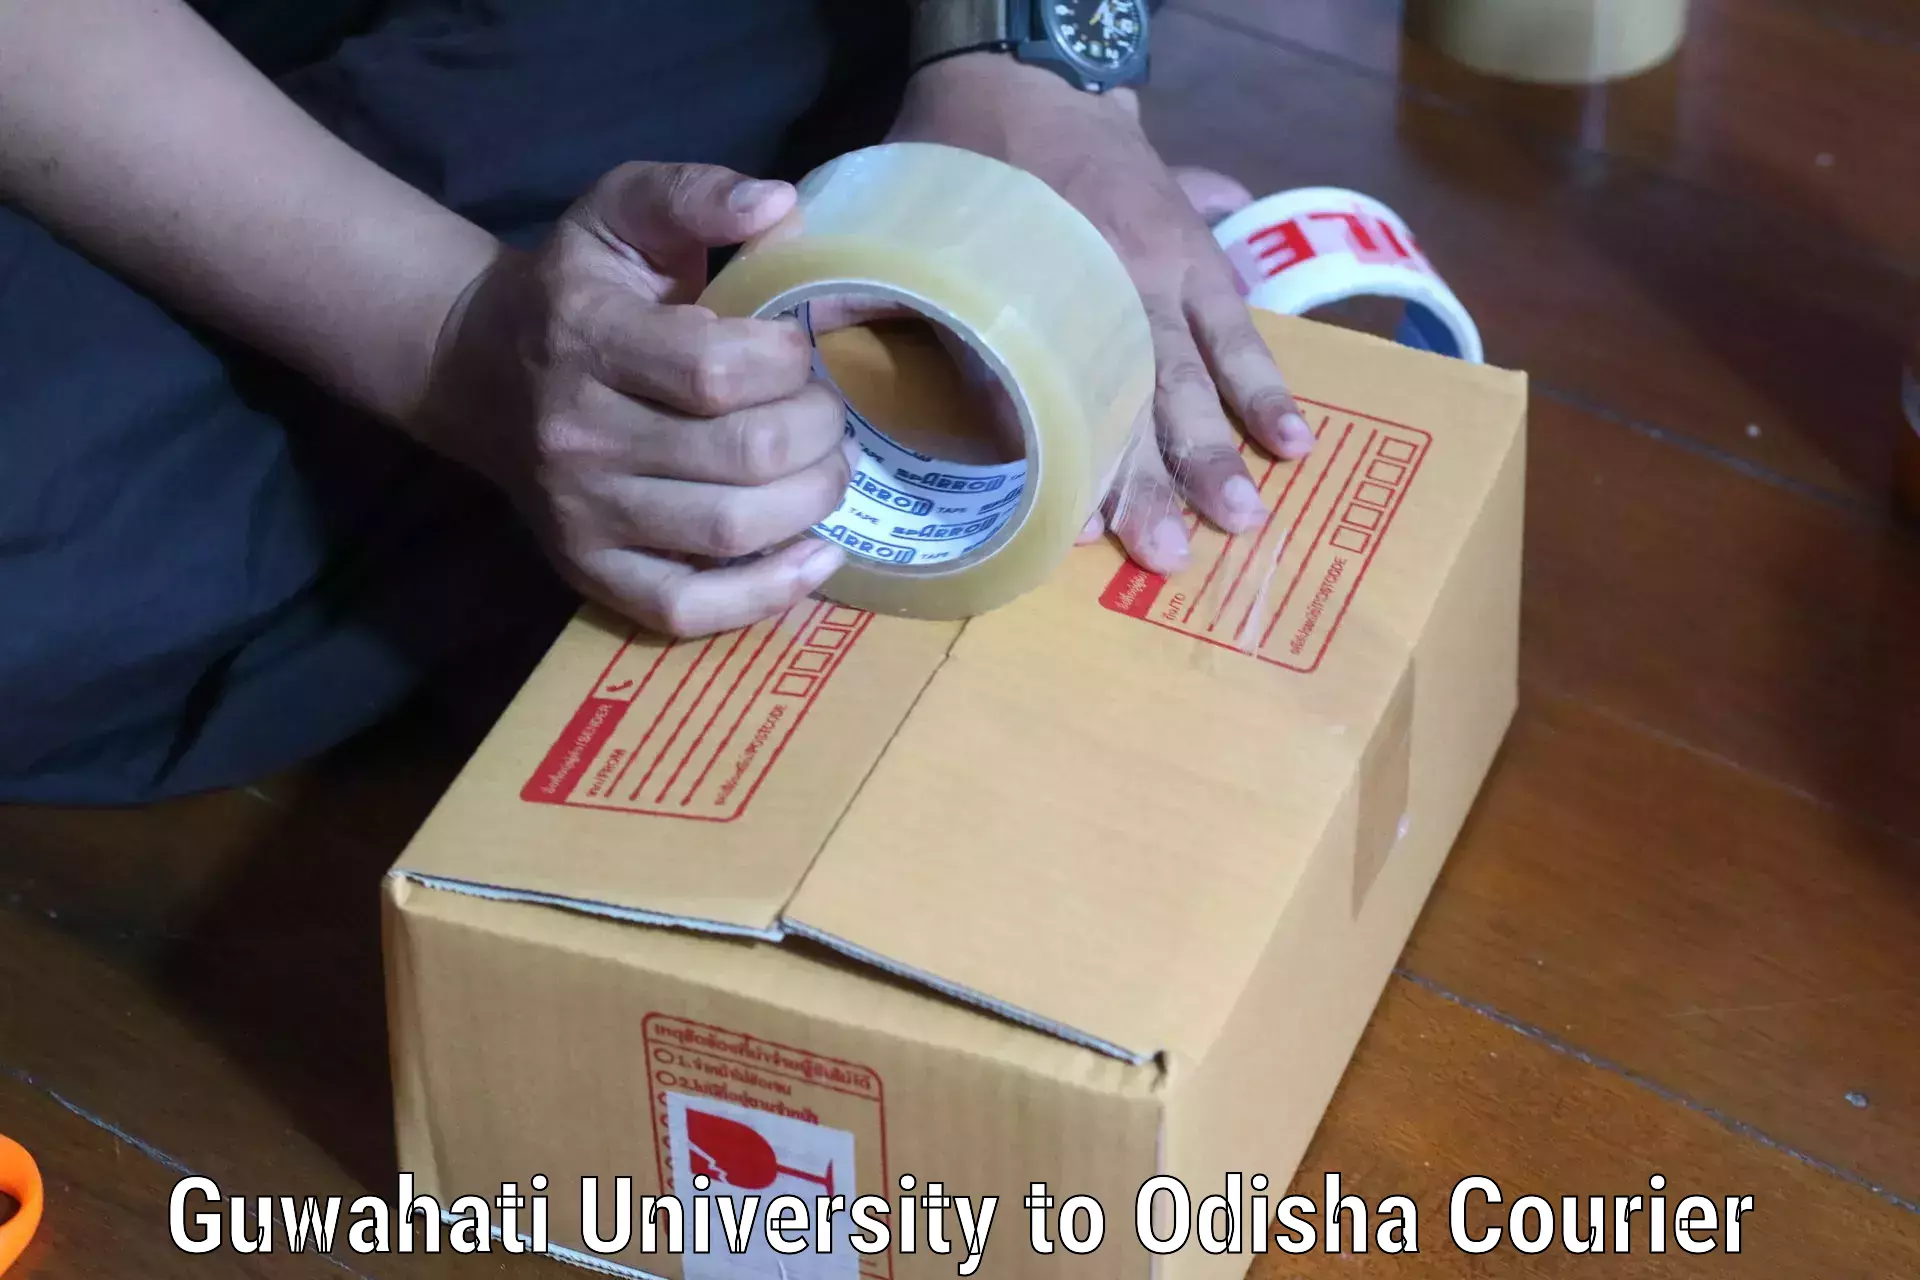 Urgent courier needs Guwahati University to Rayagada